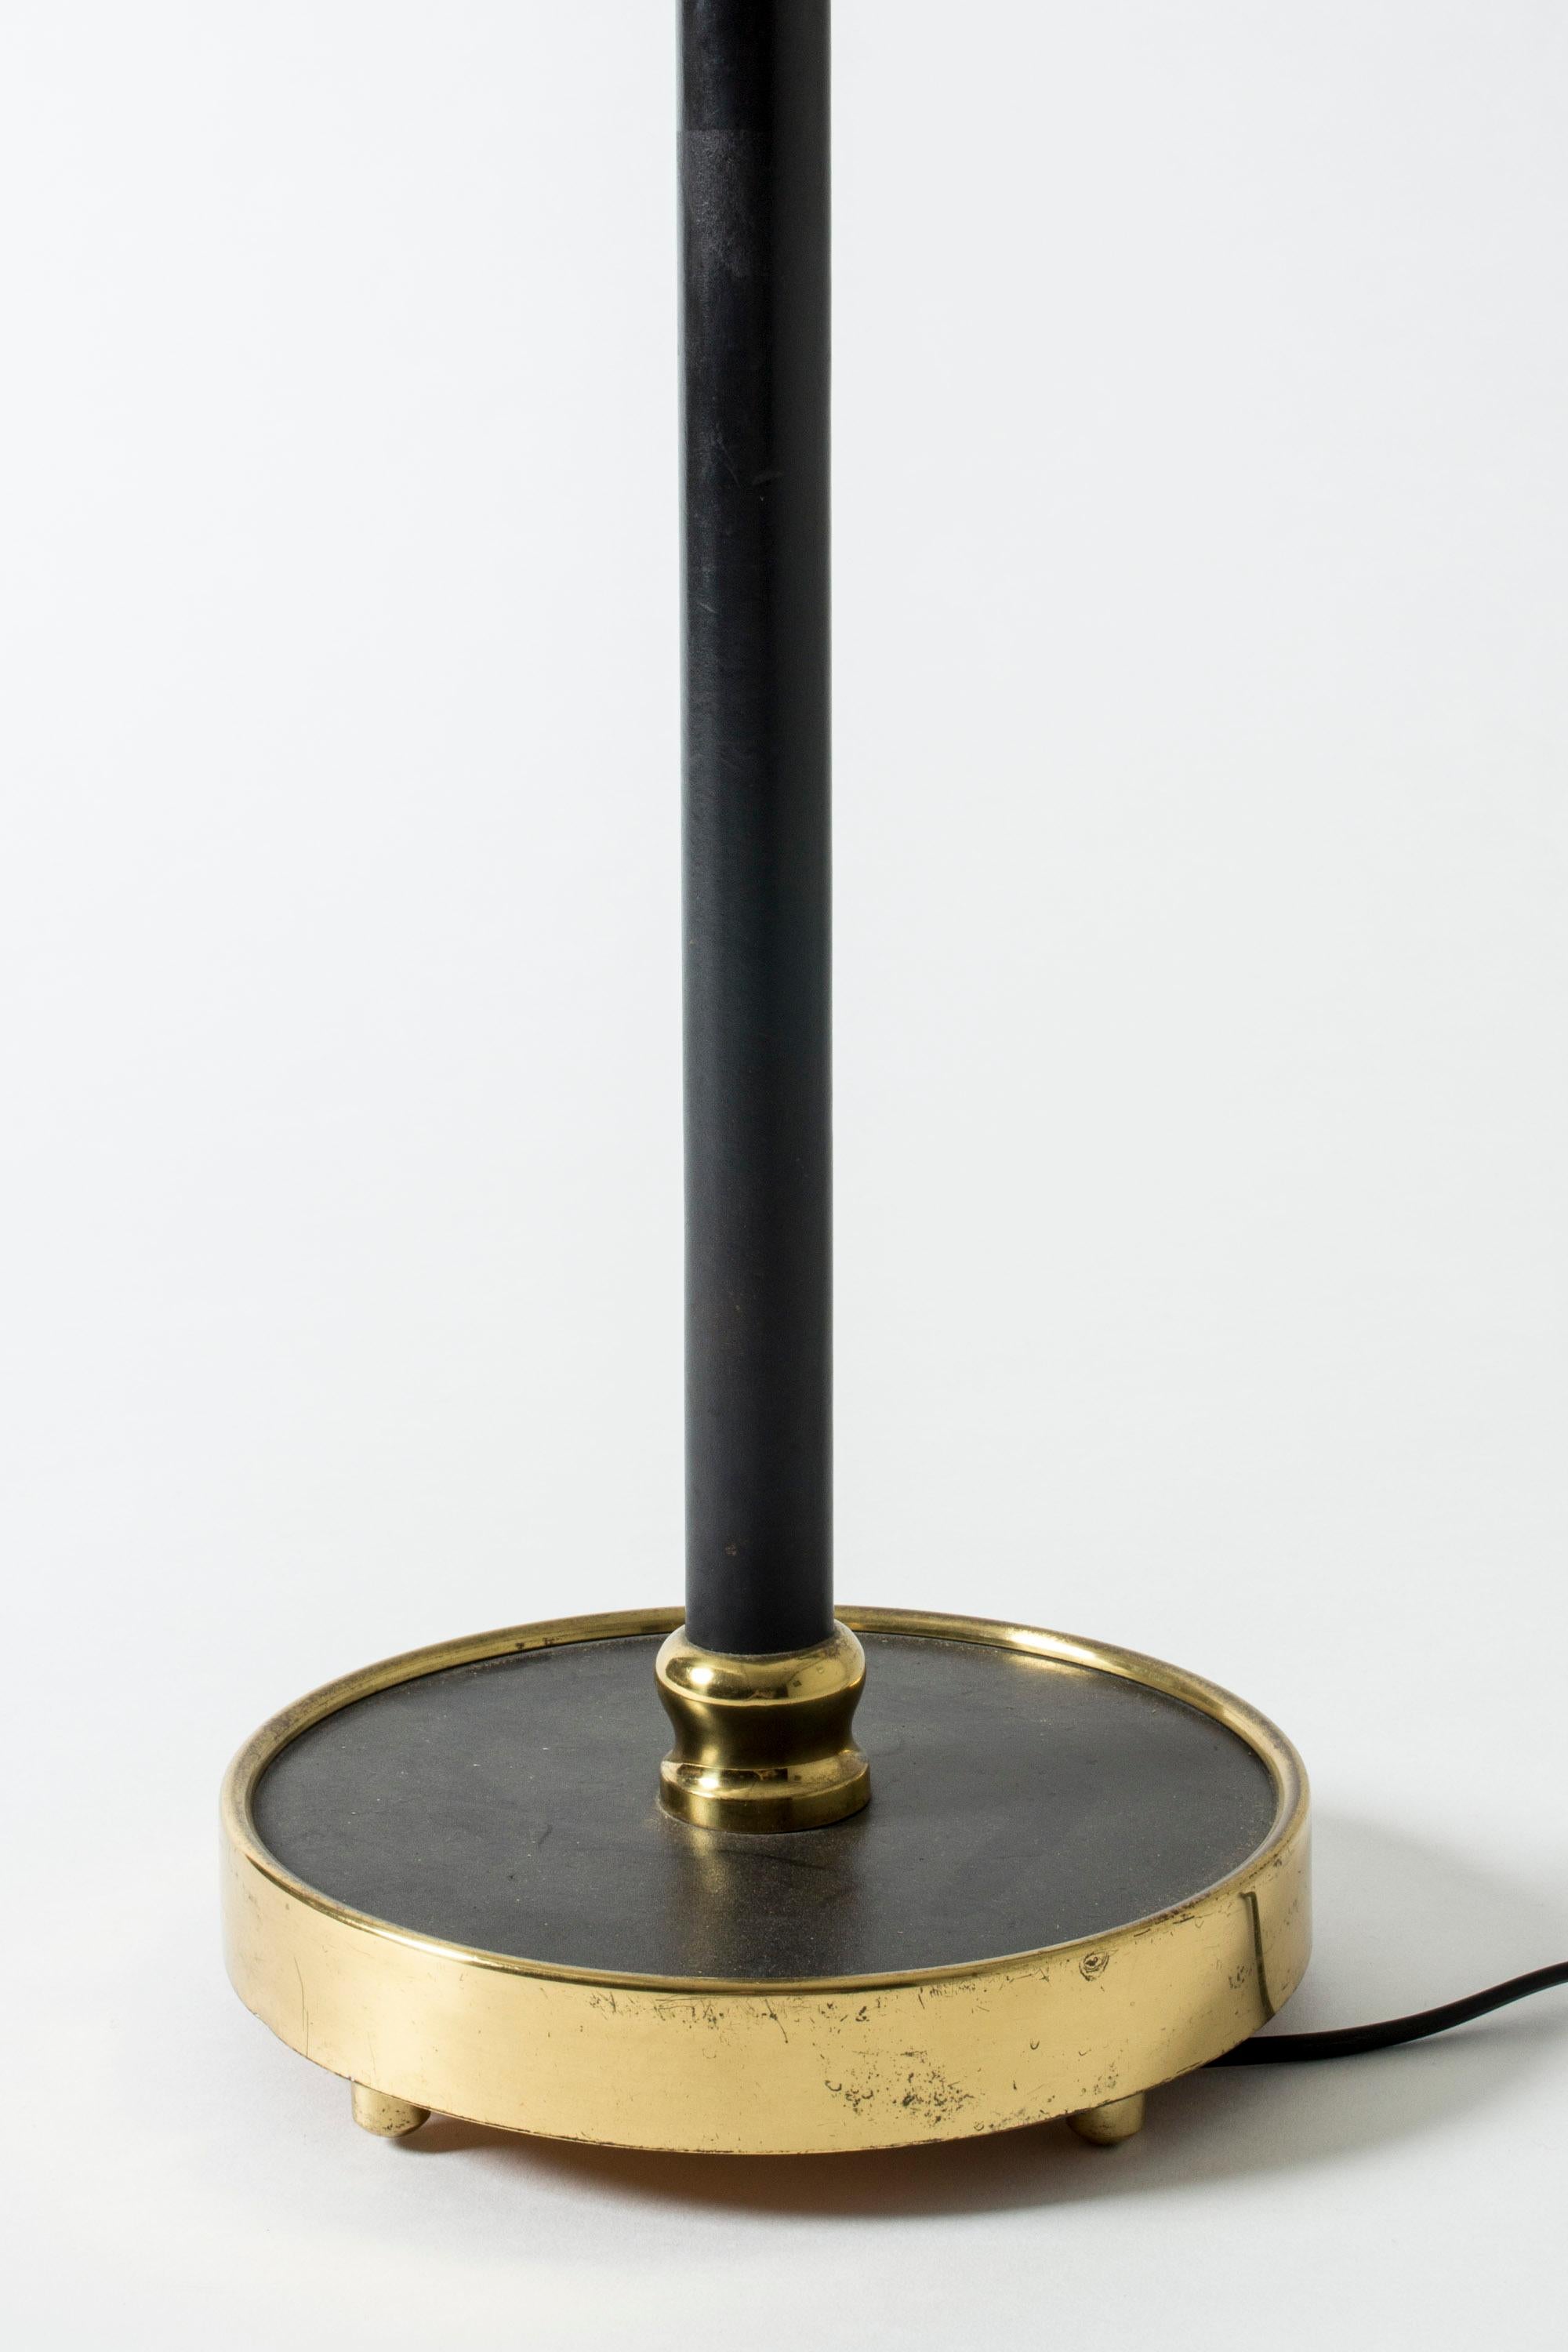 Mid-20th Century Table Lamp #2434 Designed by Josef Frank for Svenskt Tenn, Sweden For Sale